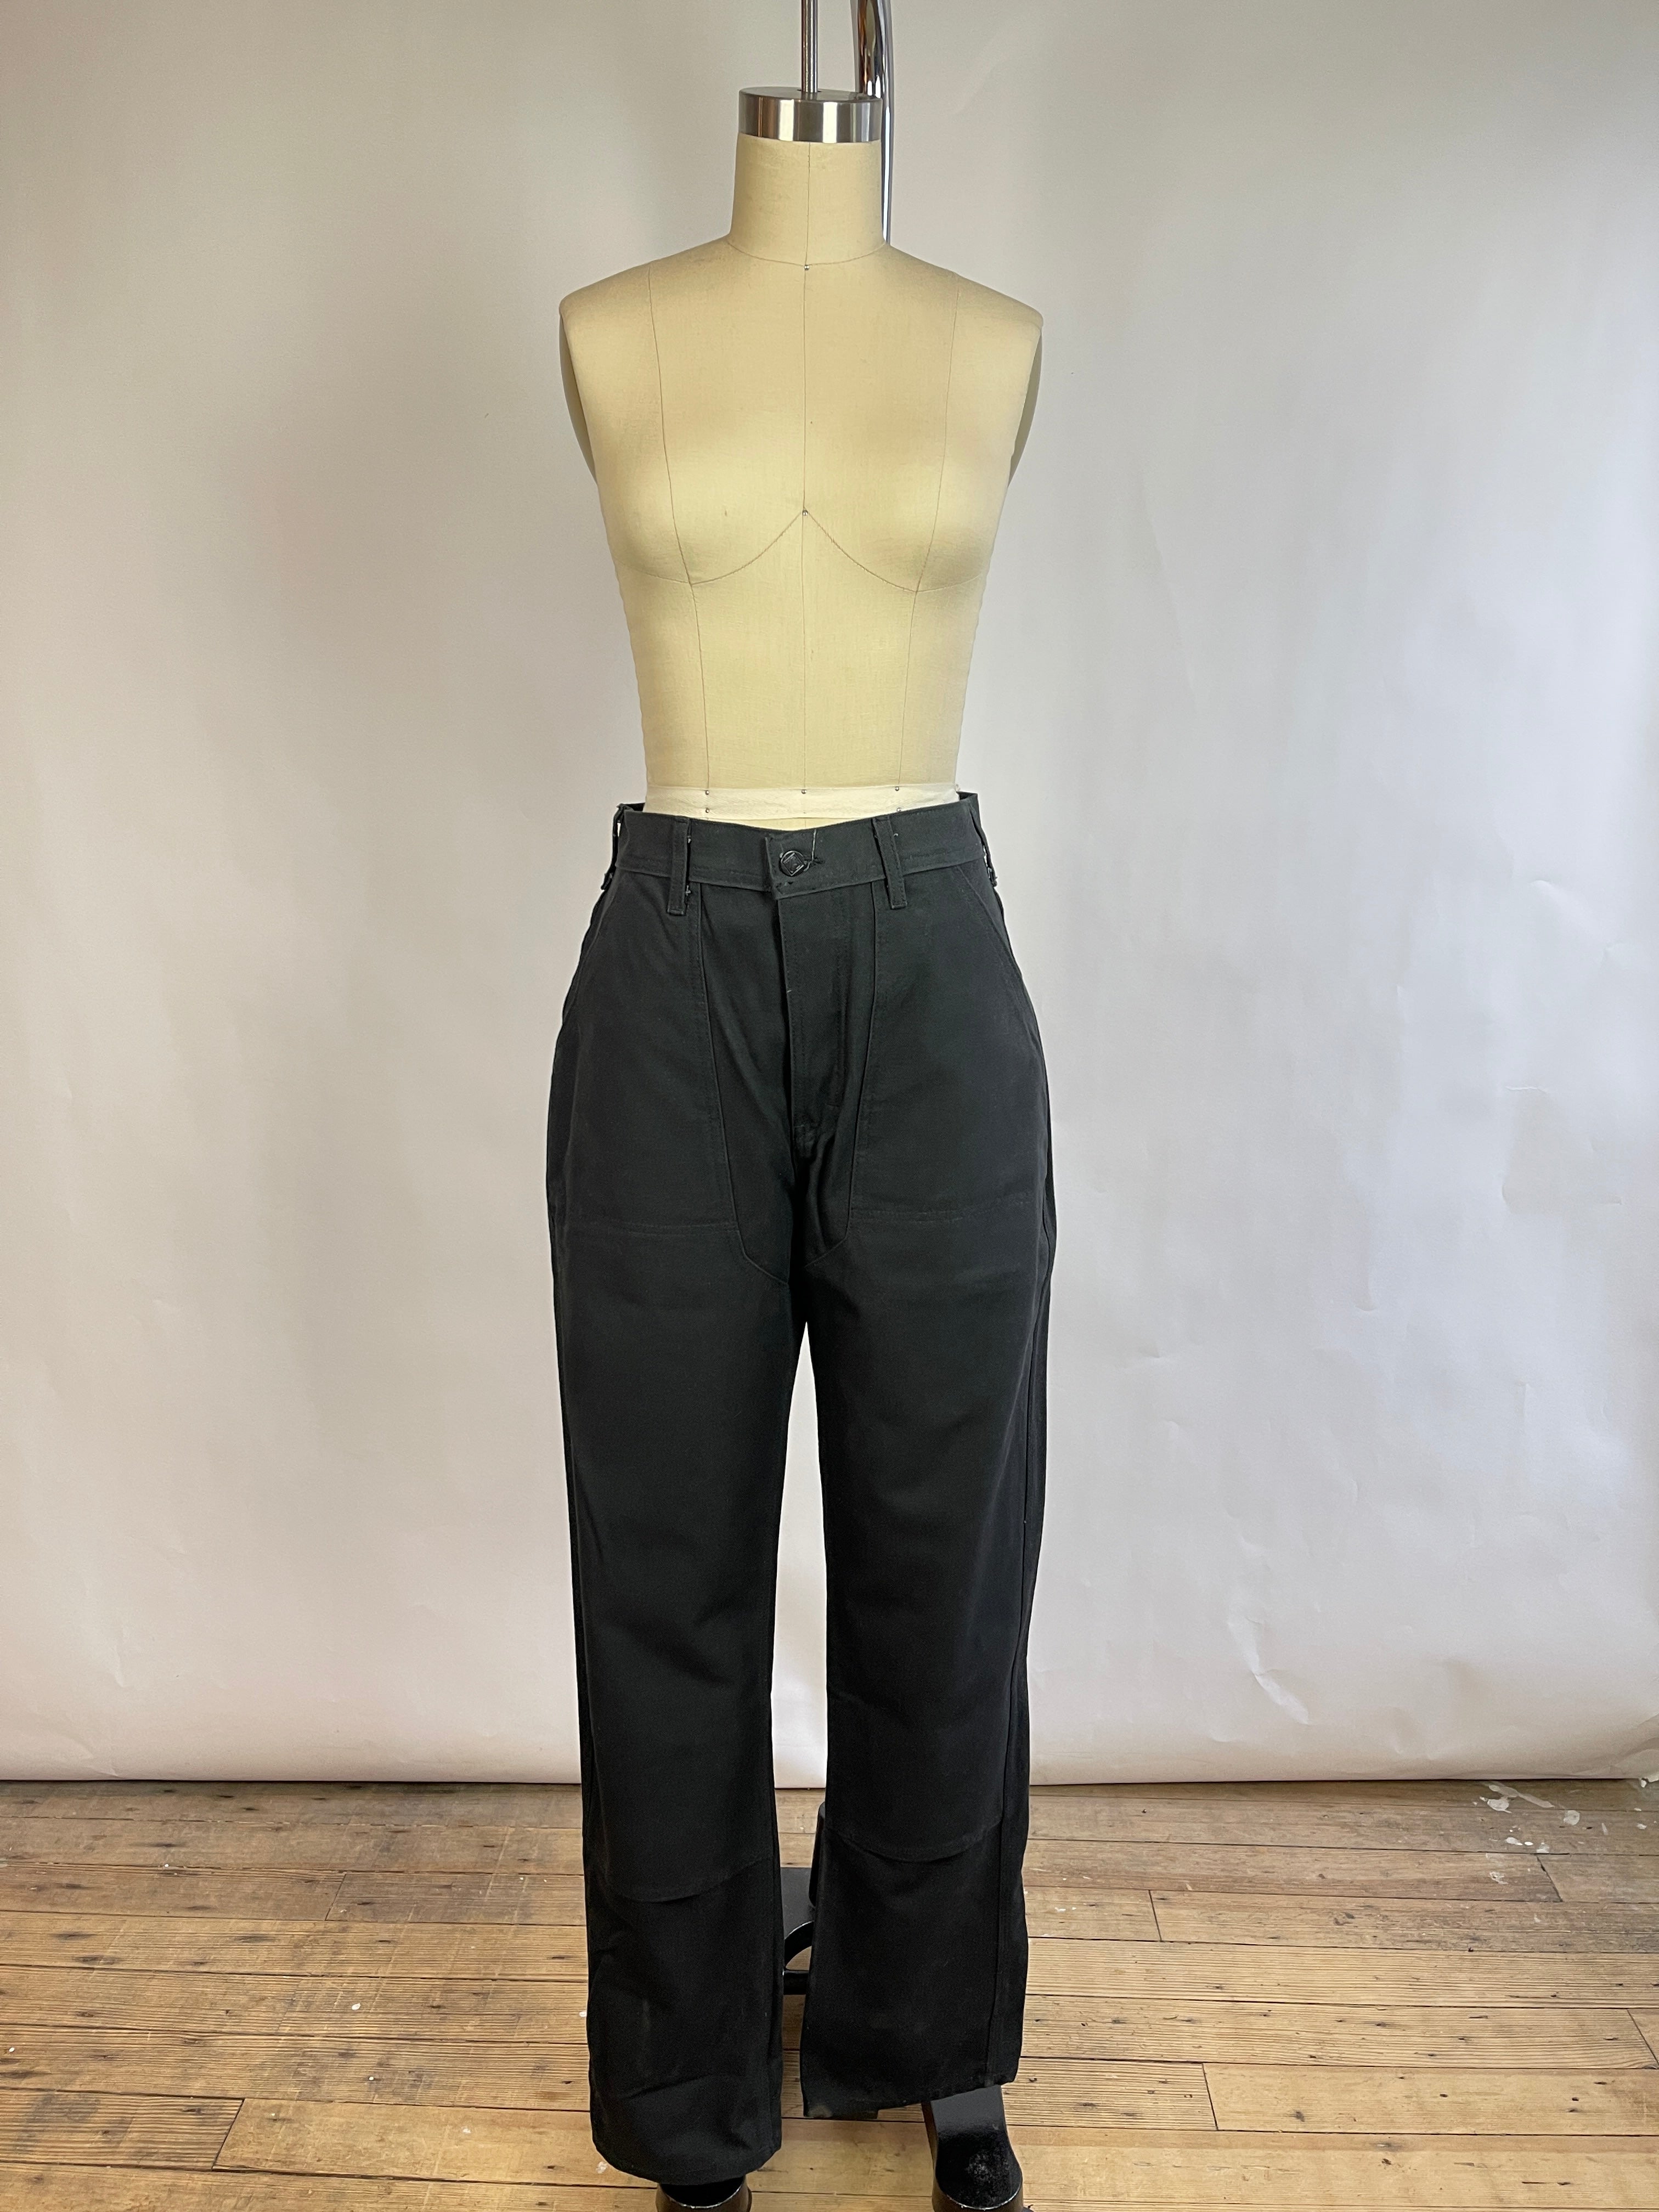 Topo Designs Black Work Pants (10/30)